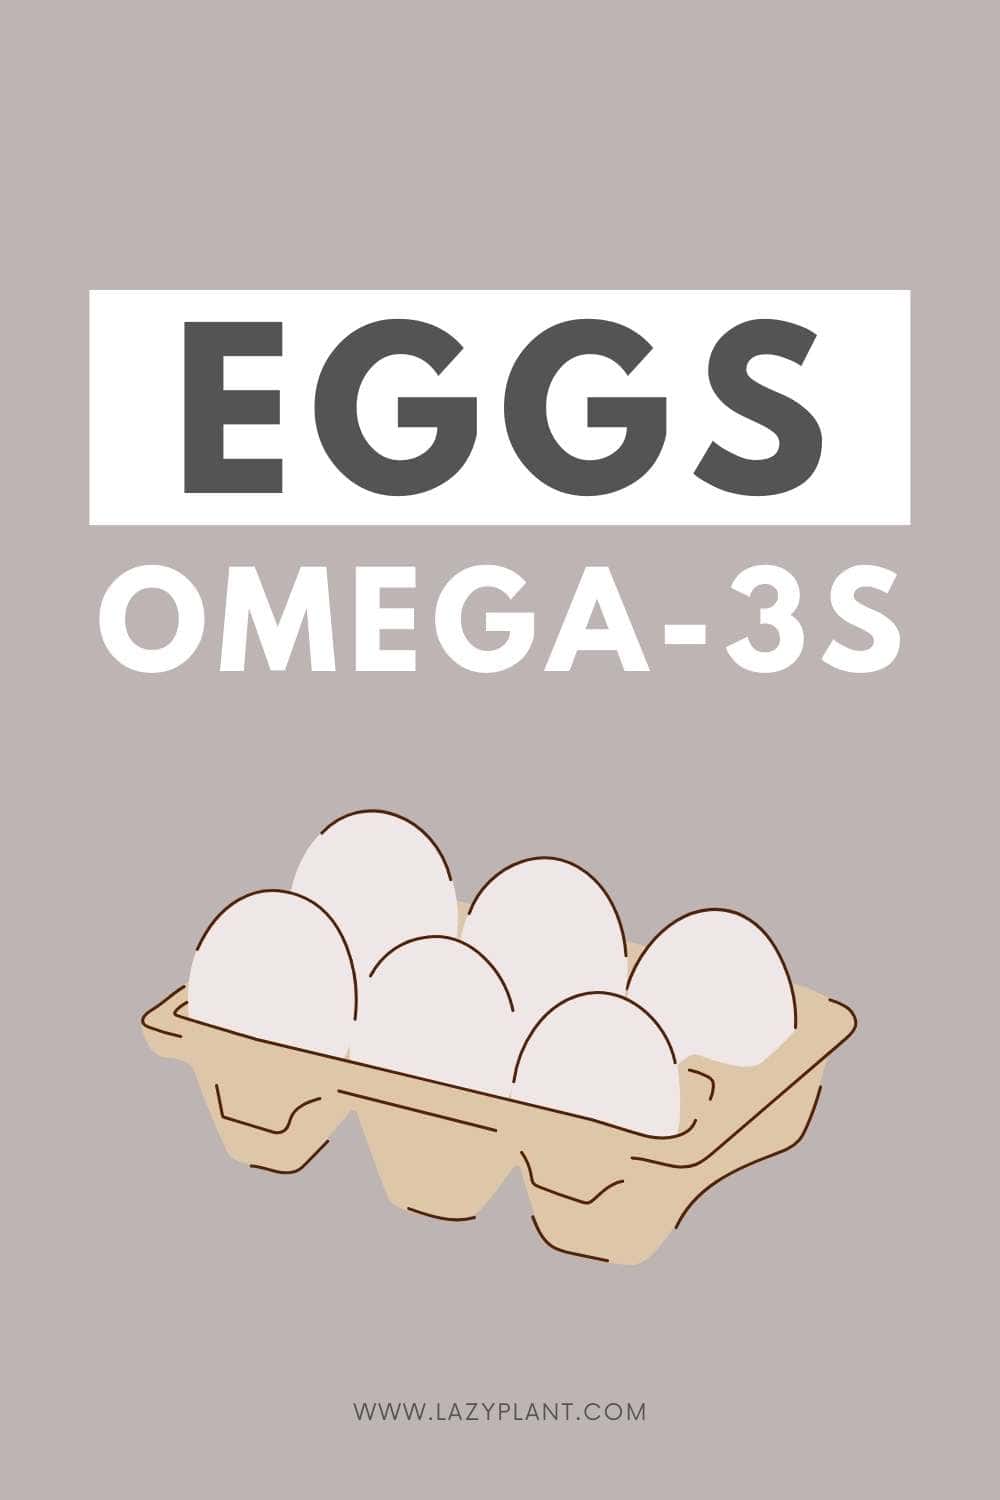 Eggs contain ALA, EPA & DHA!